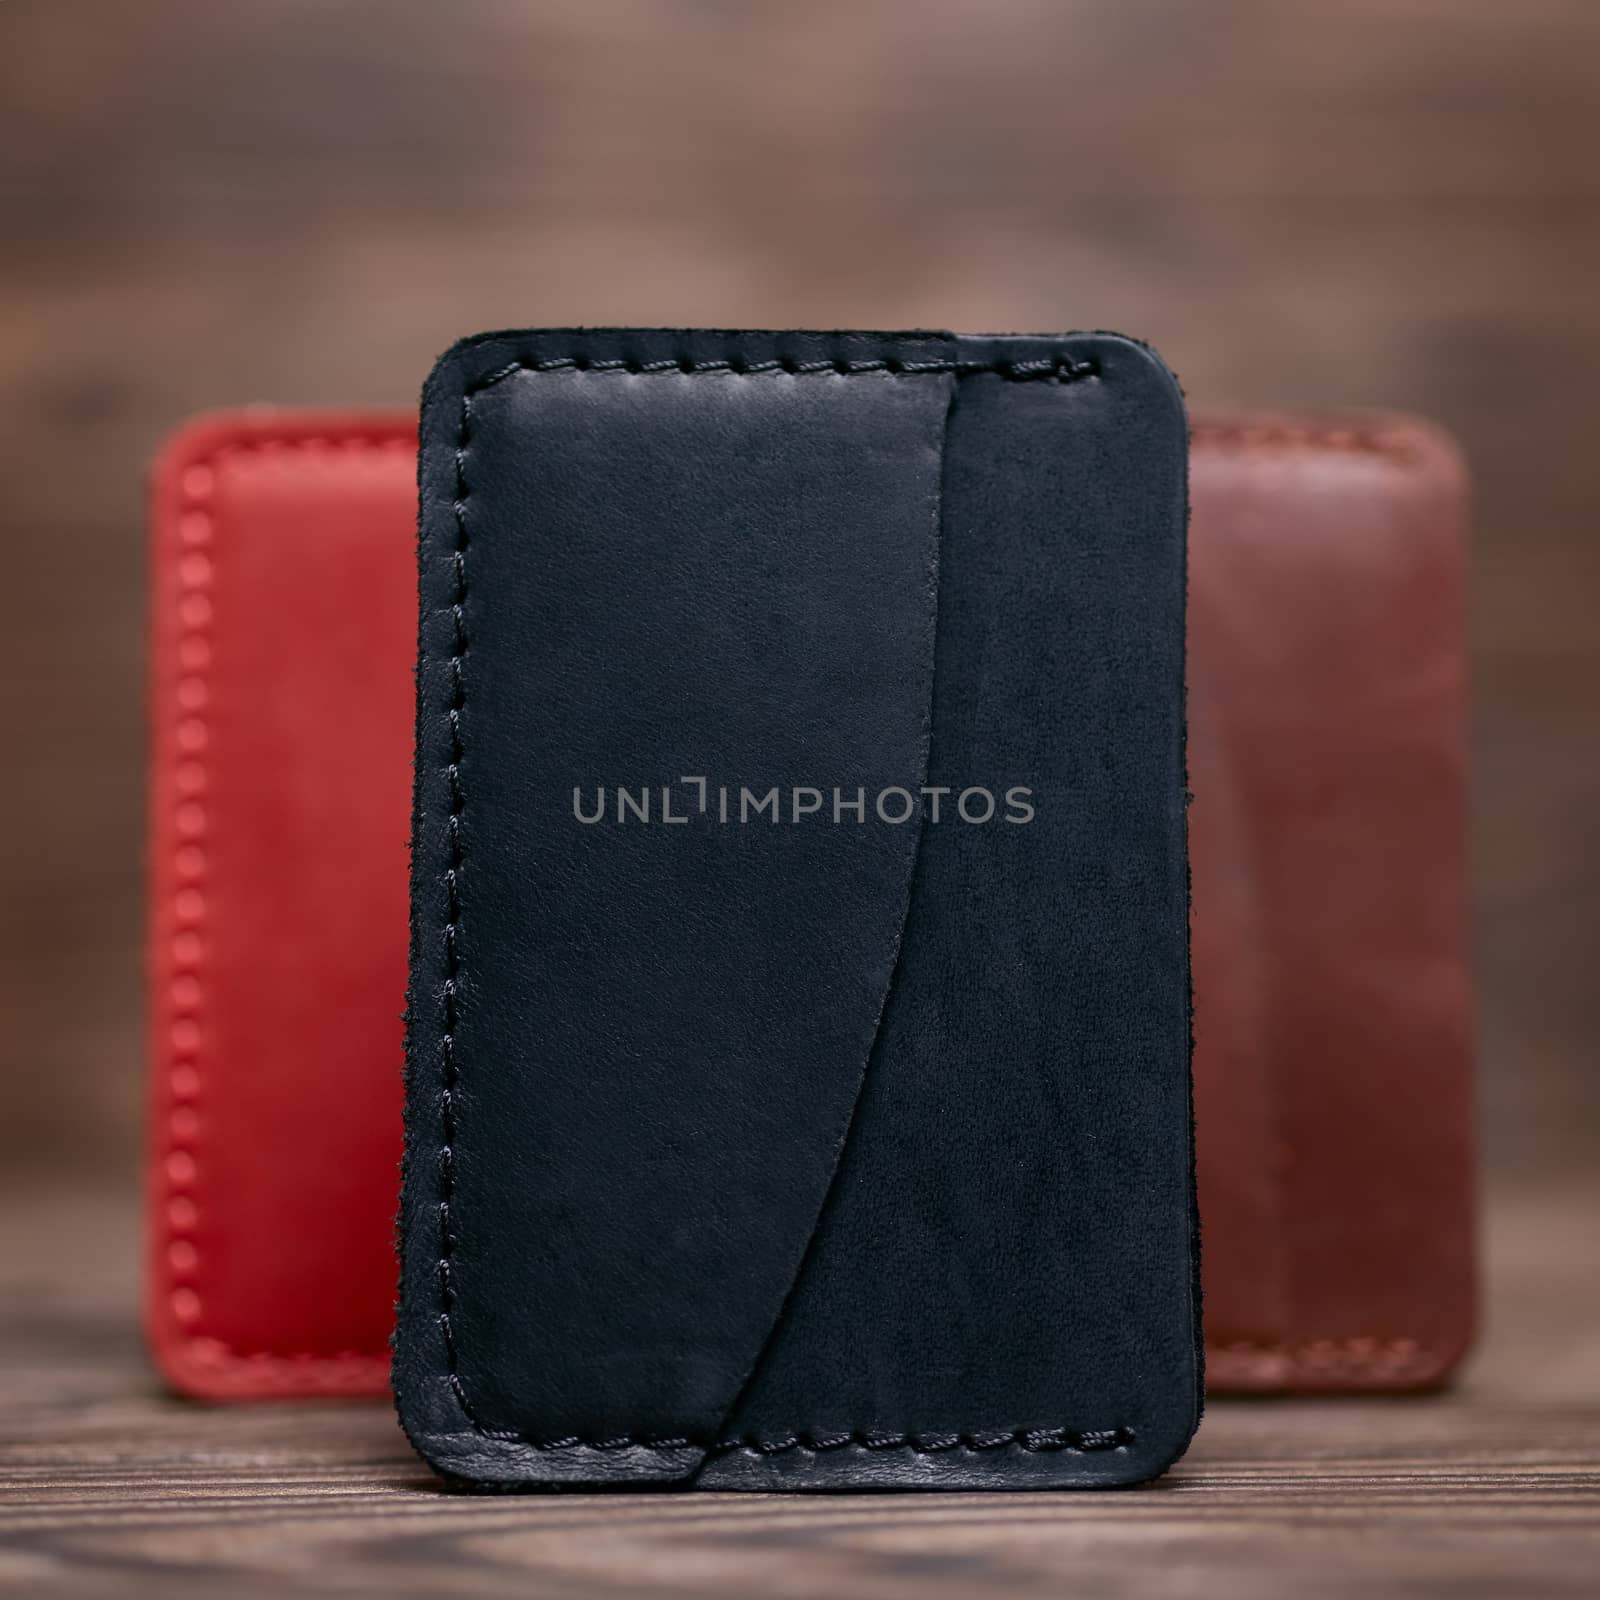 One pocket black leather handmade cardholder. On blurred background stay other colour cardholders. Stock photo on blurred background.